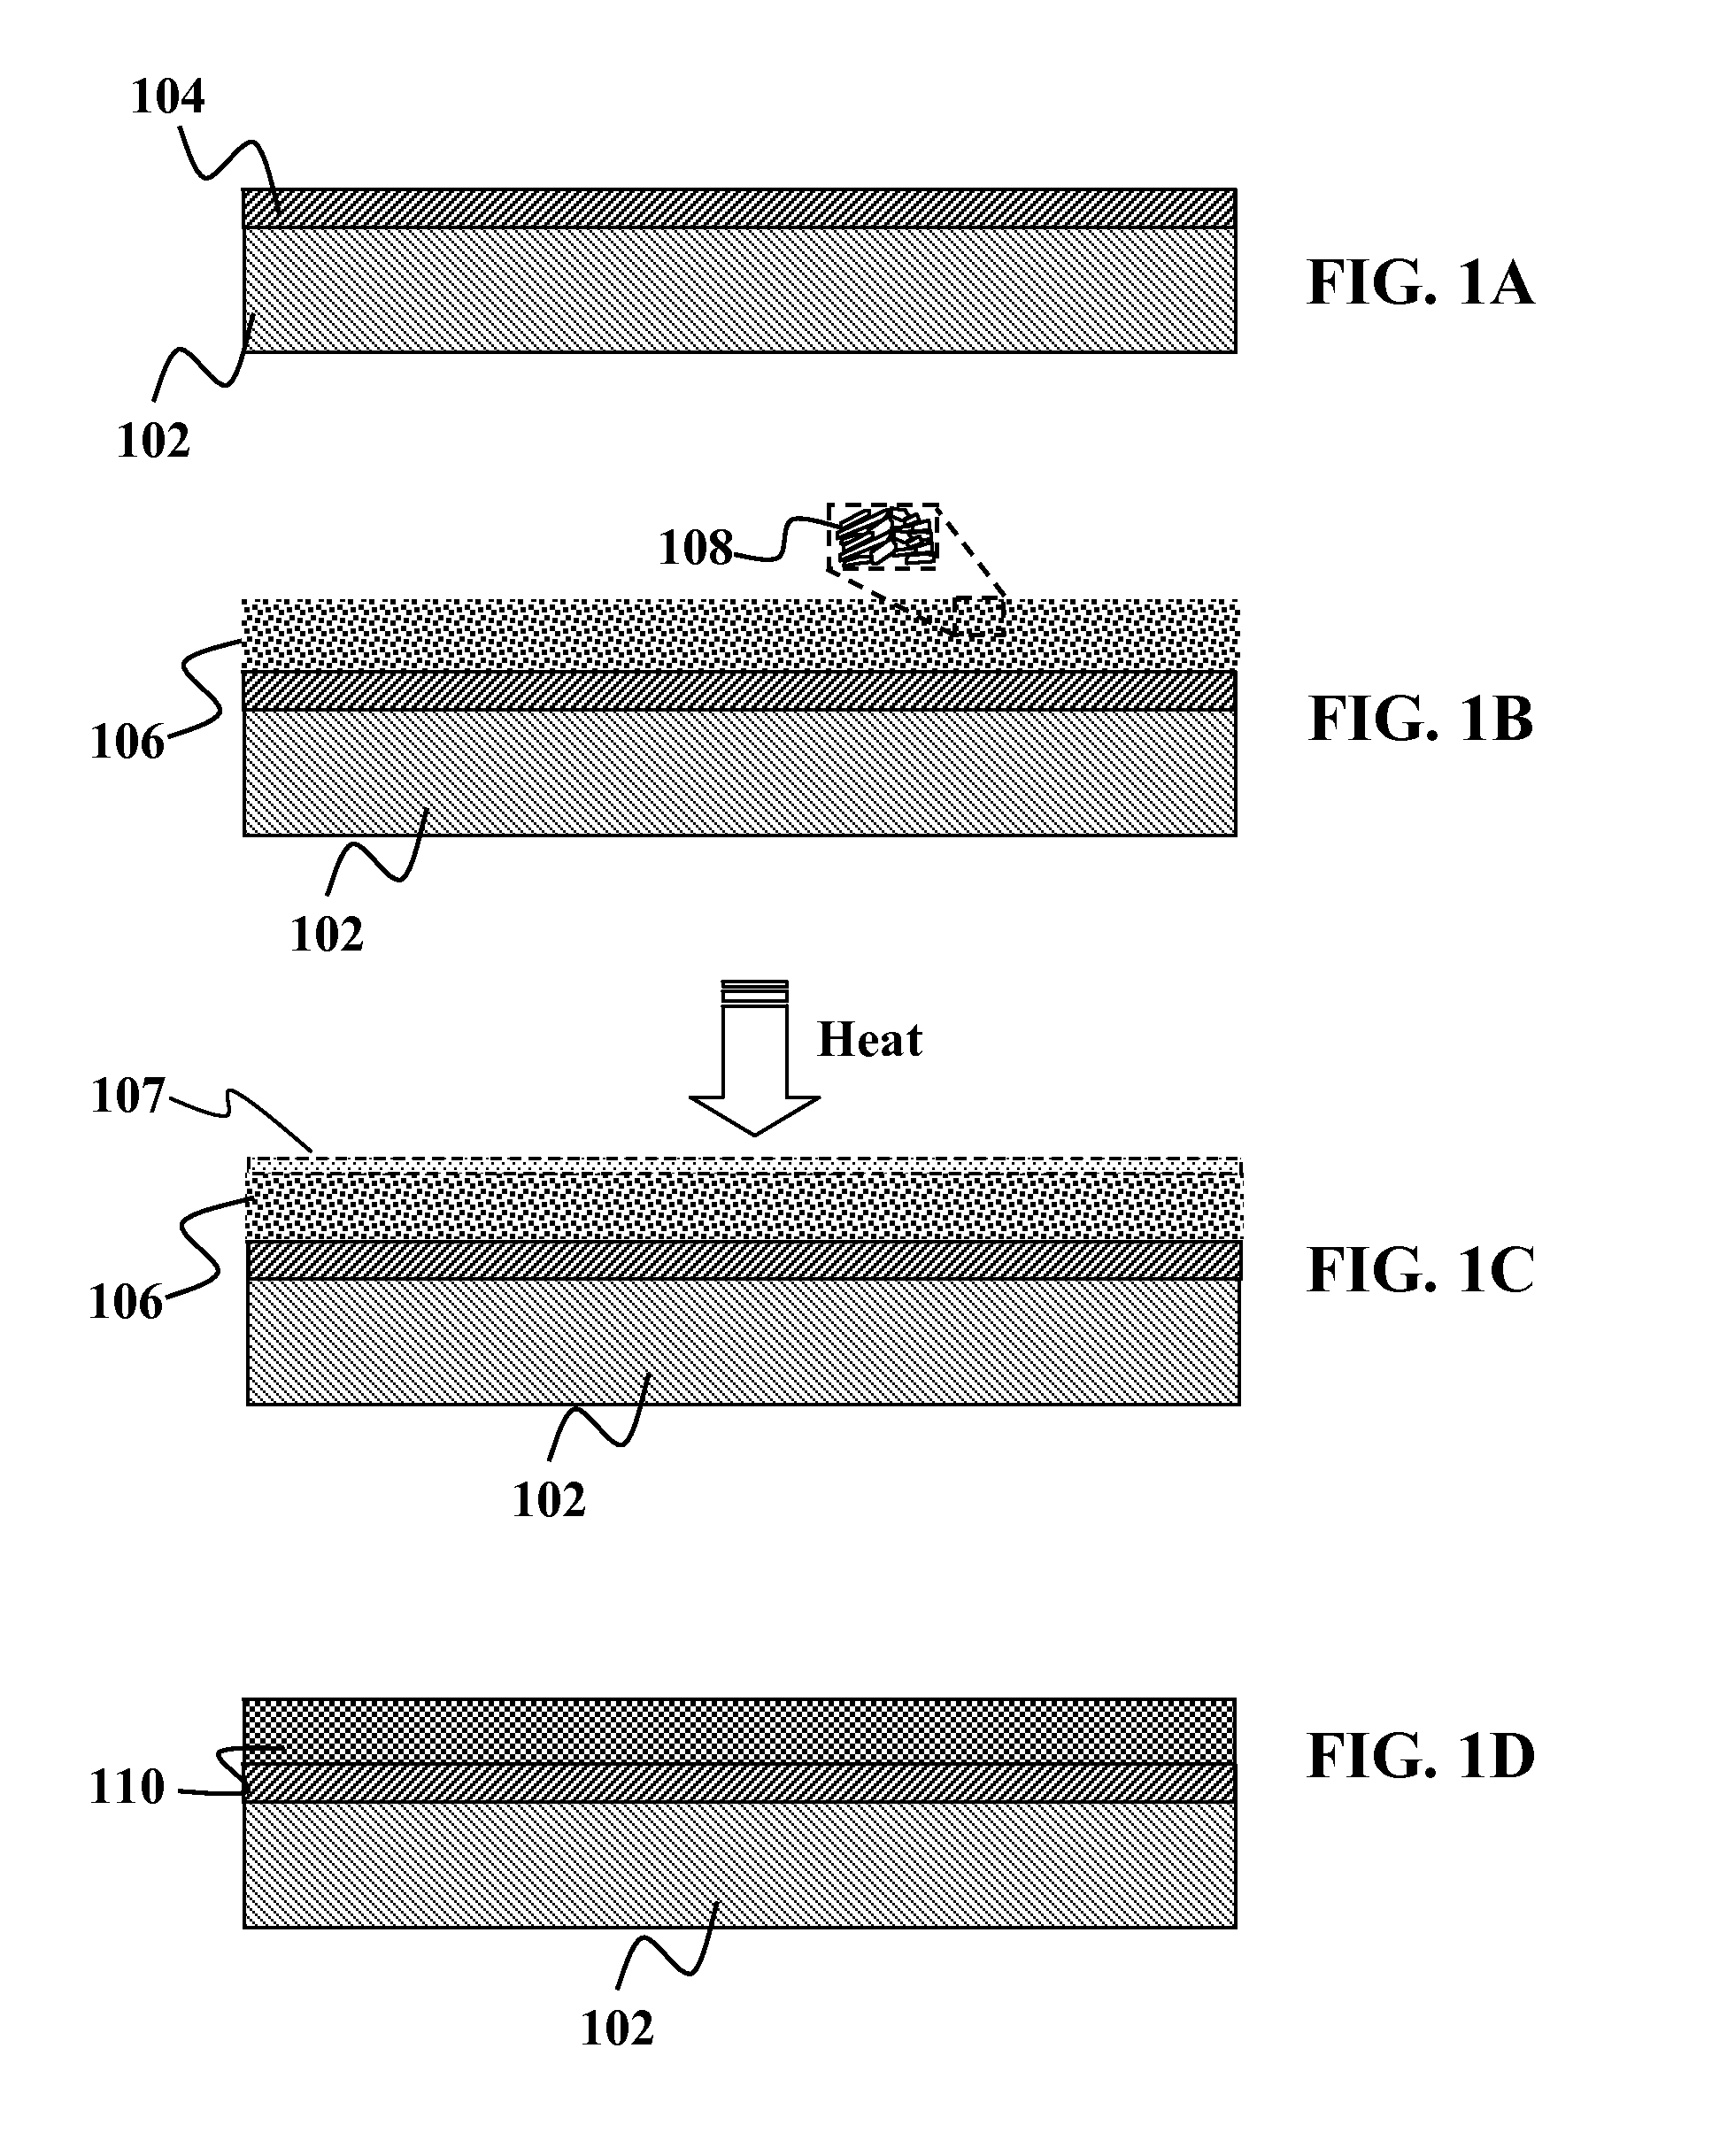 High-Throughput Printing of Semiconductor Precursor Layer from Nanoflake Particles